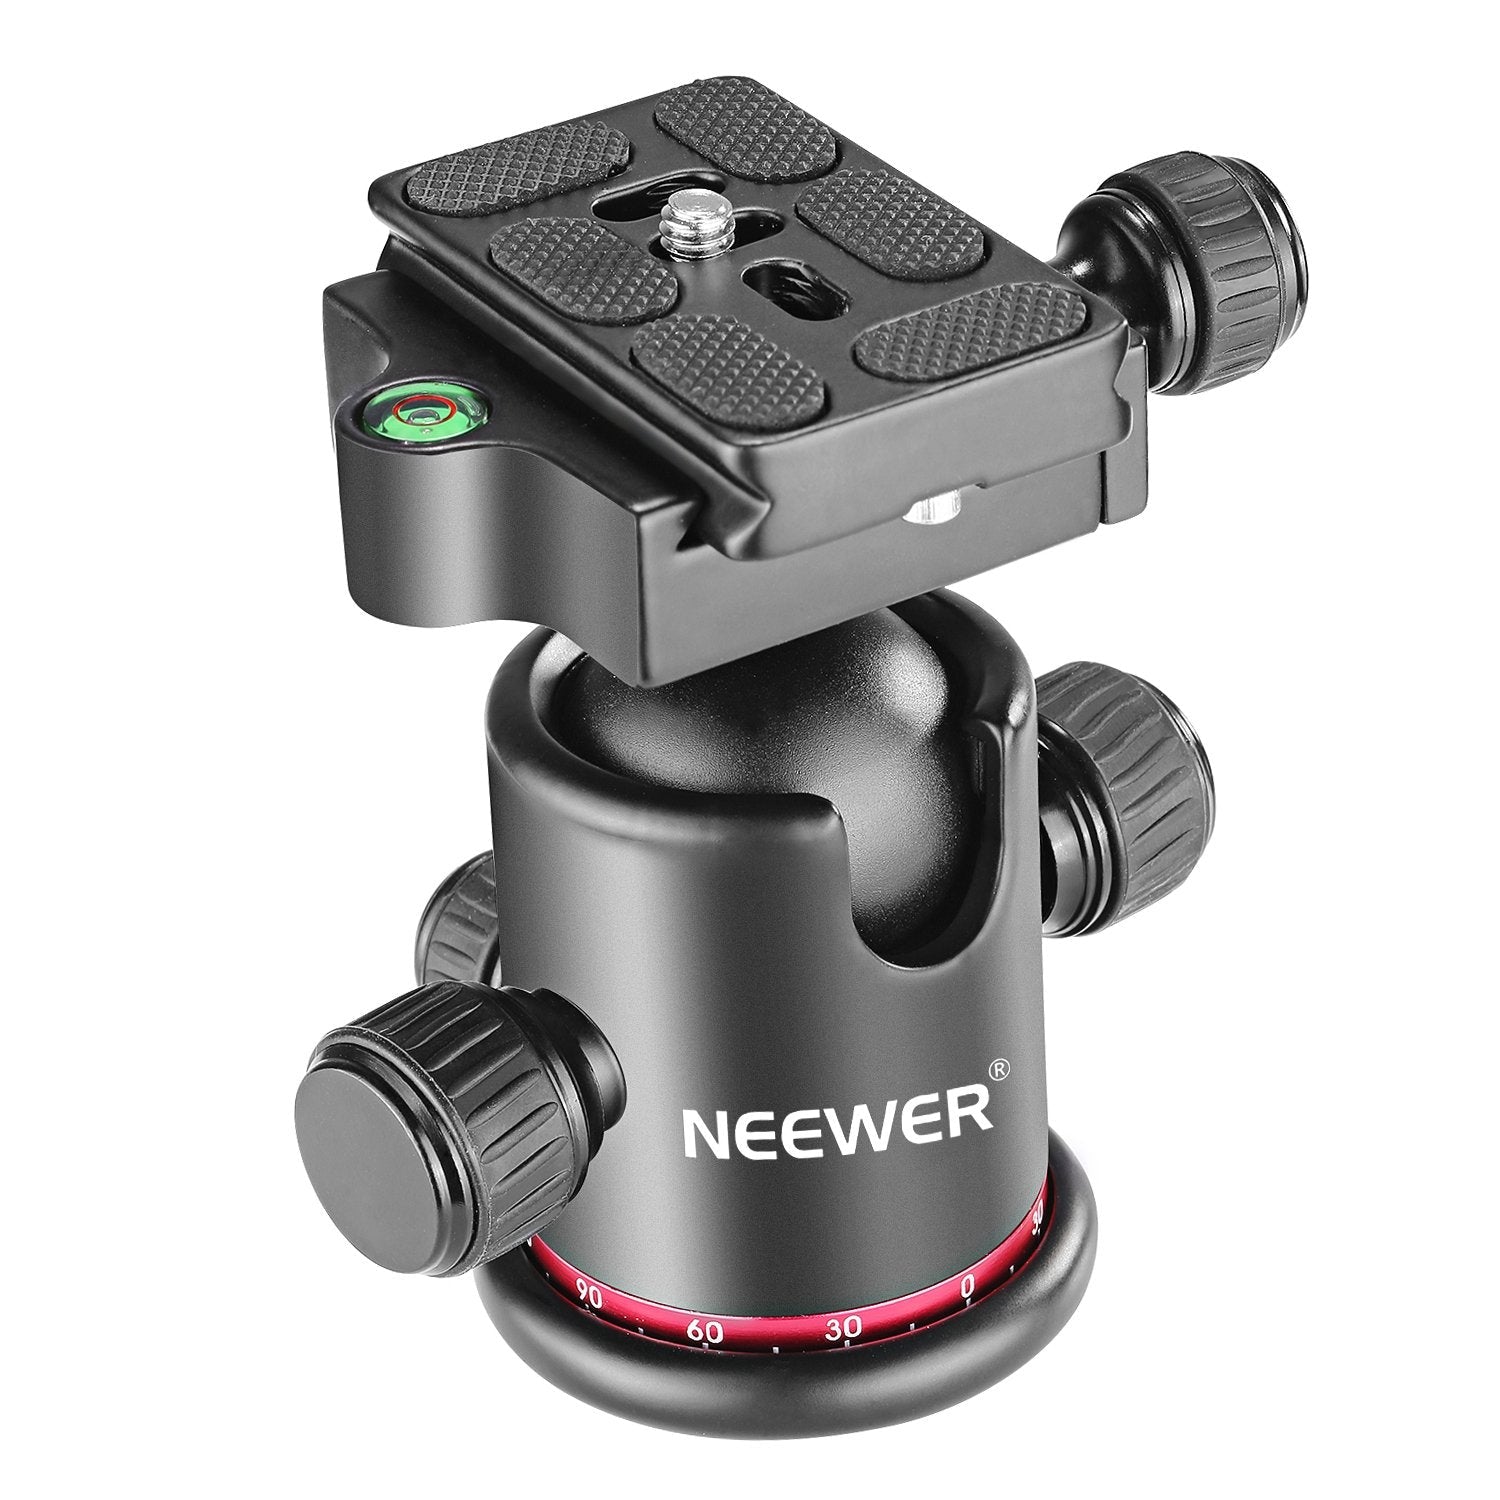 Neewer Metal 360 Degree Rotating Panoramic Ball Head with 1/4" Quick Shoe Plate